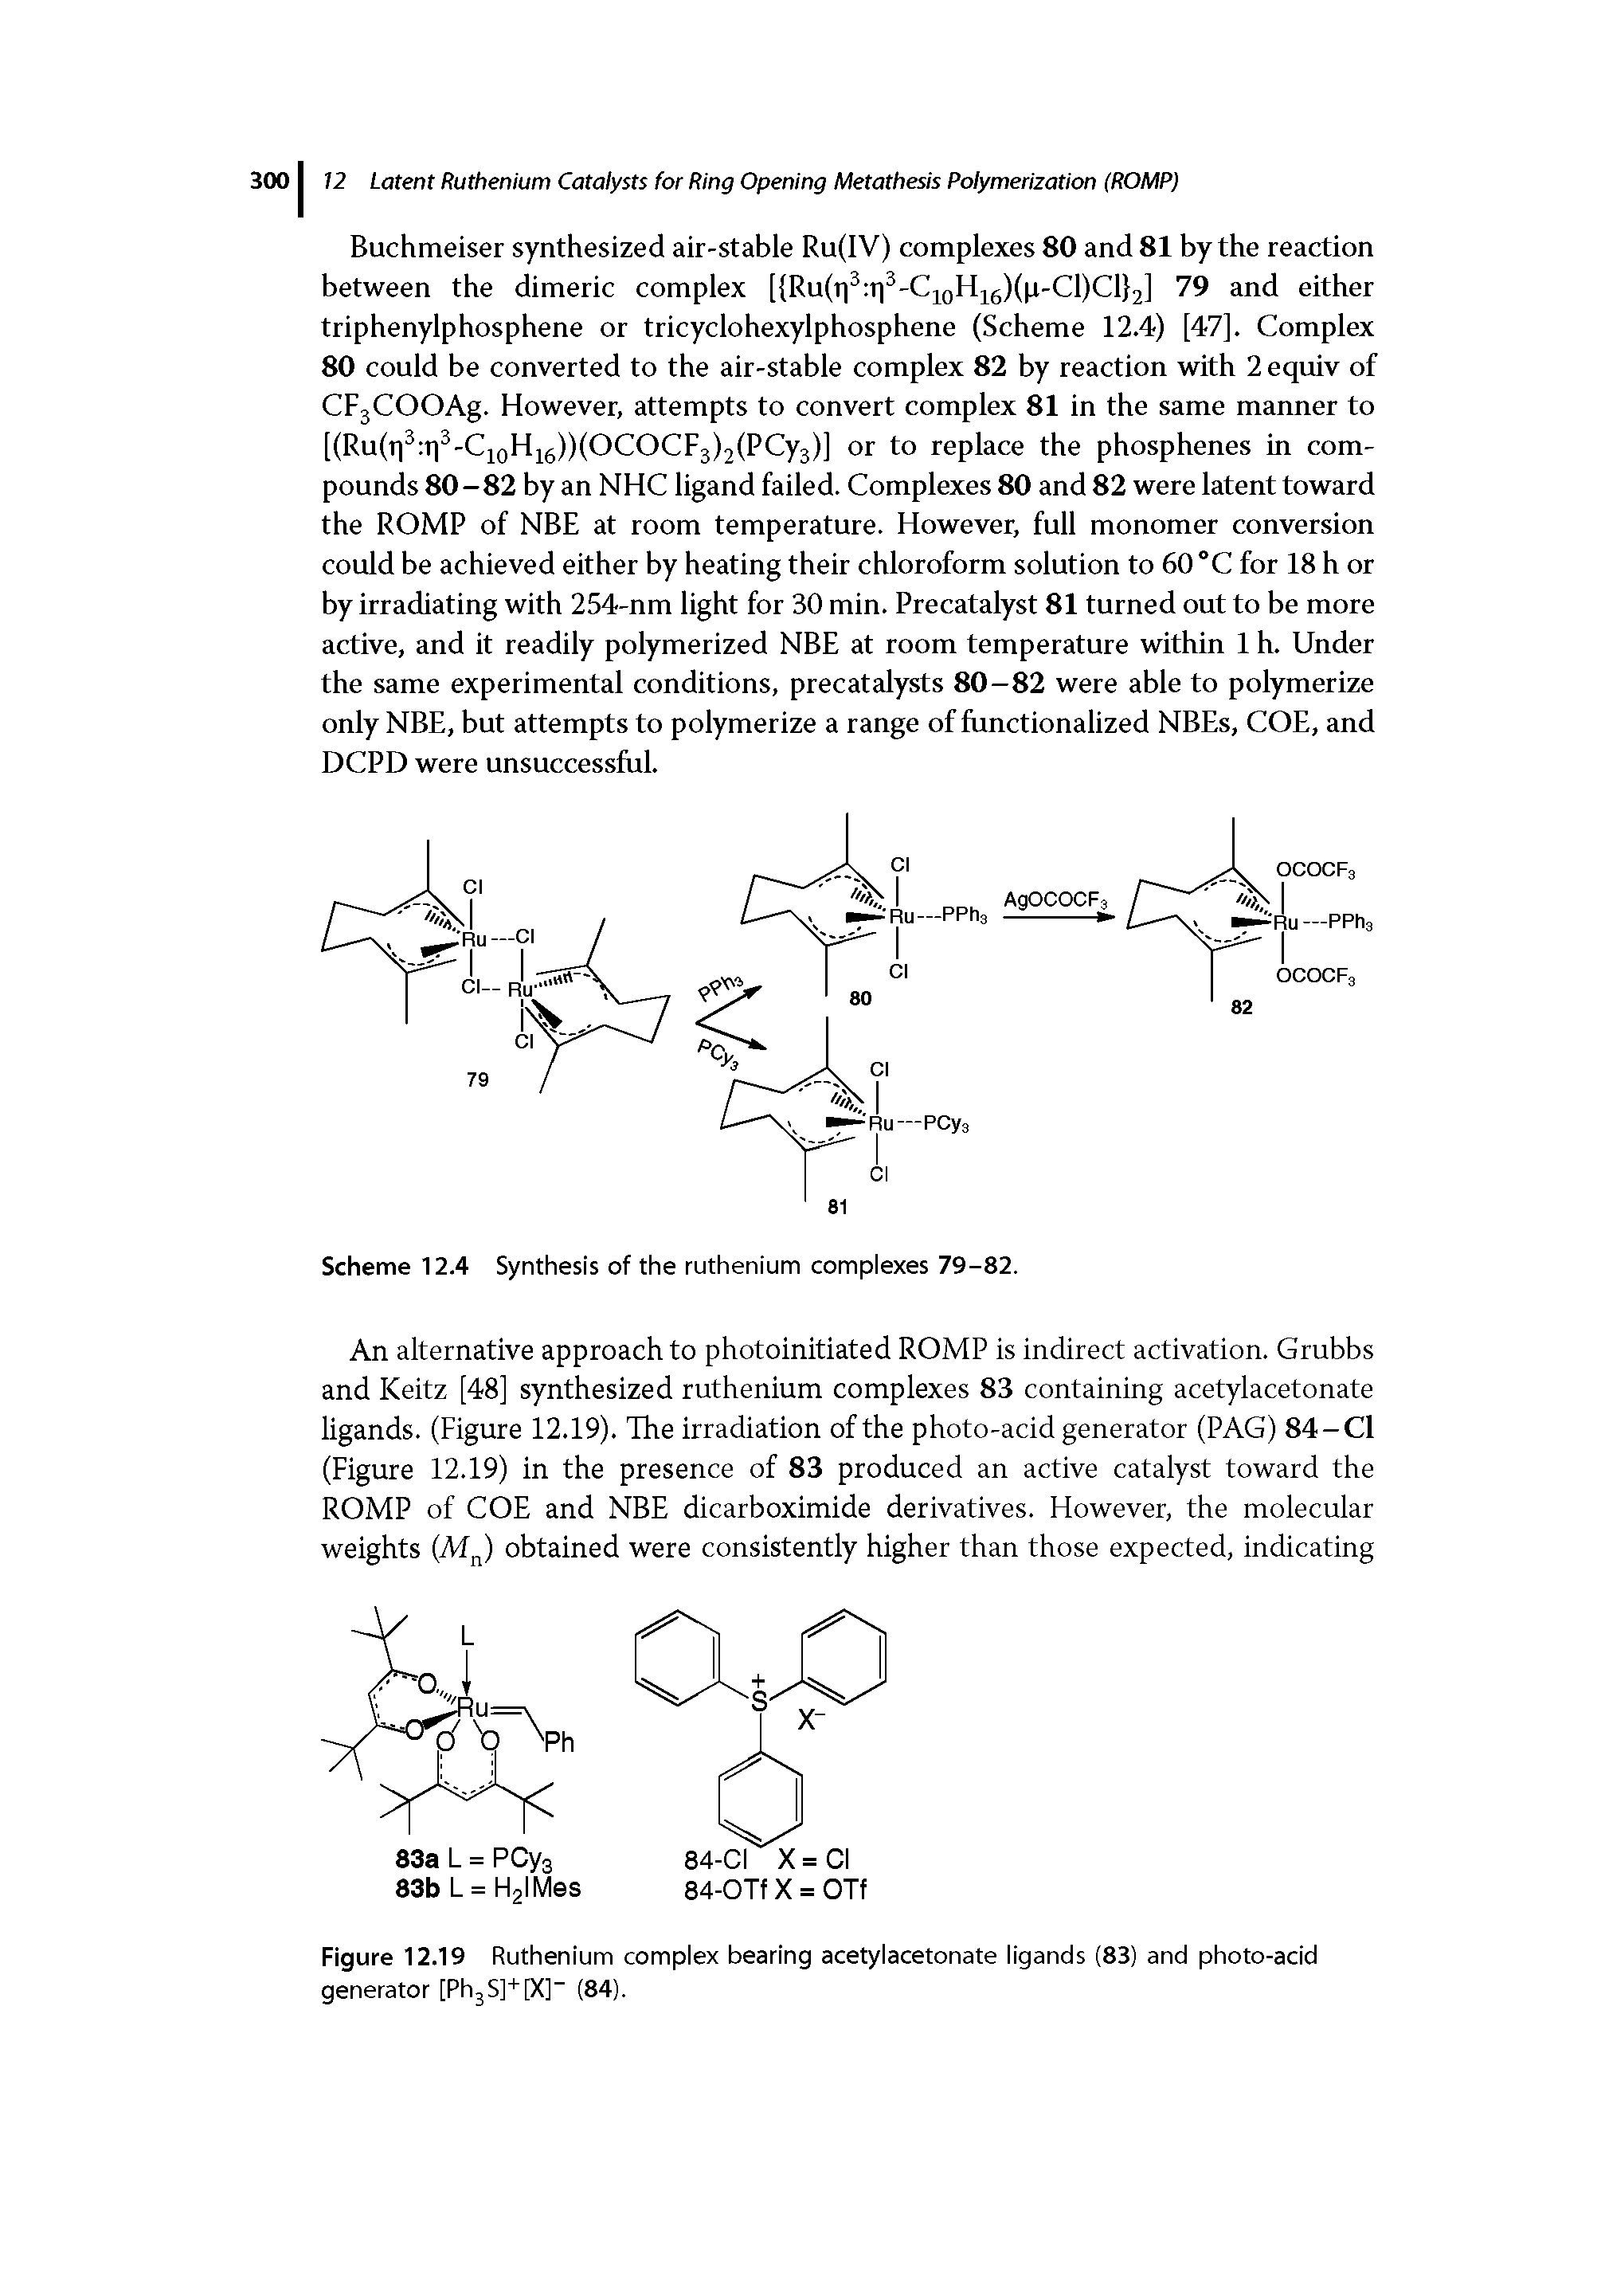 Figure 12.19 Ruthenium complex bearing acetylacetonate ligands (83) and photo-acid generator [PhjSJ+iX]" (84).